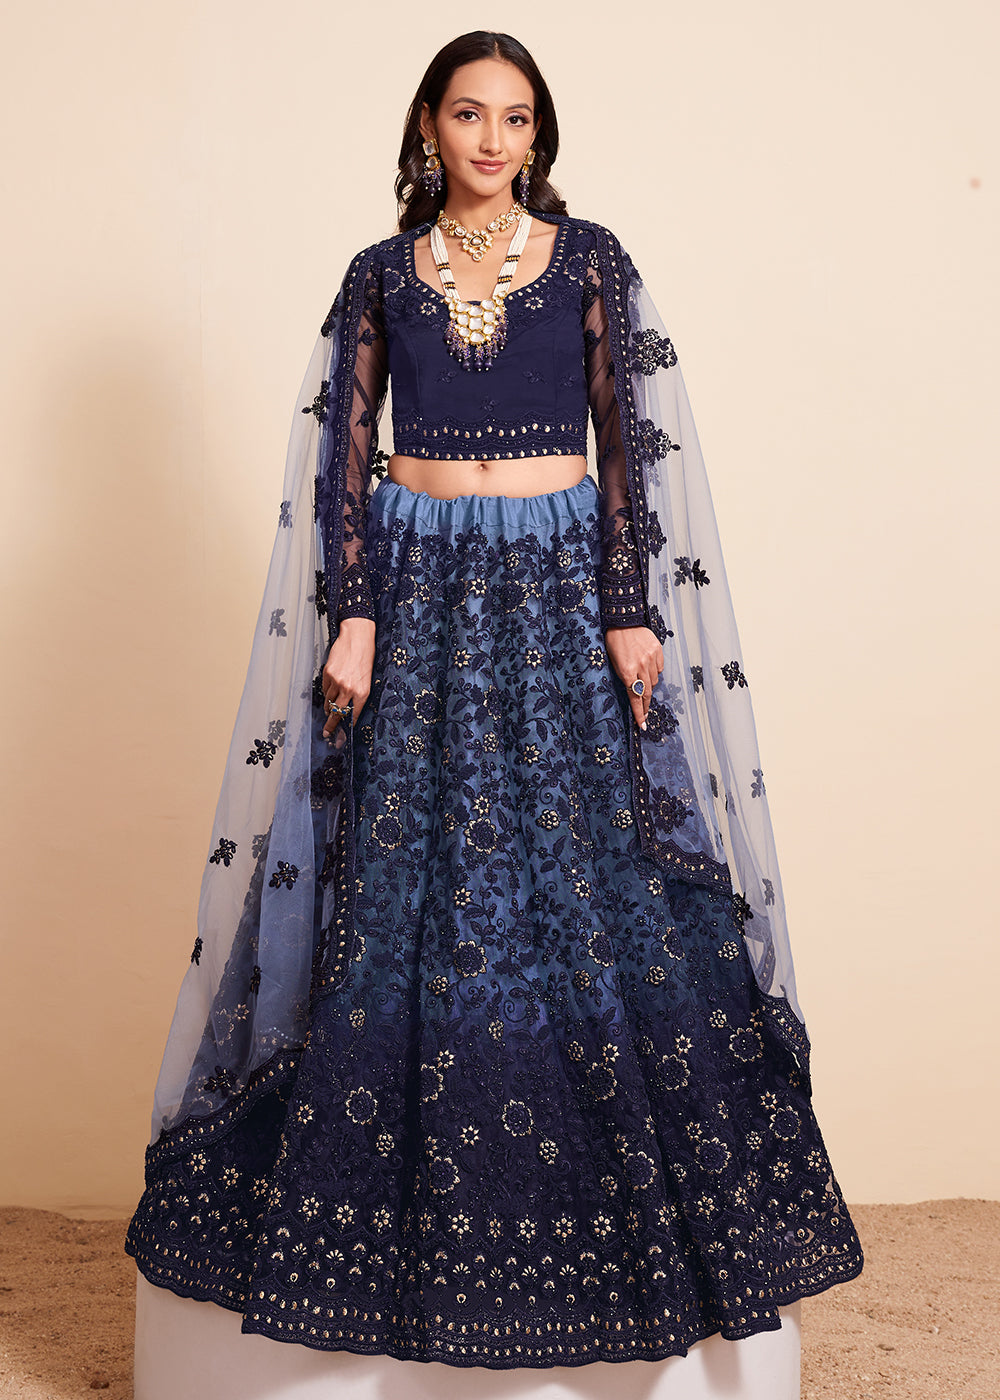 Buy Silk Fabric Bridal Lehenga Choli in Rani Pink Color Online - LEHV2759 |  Appelle Fashion